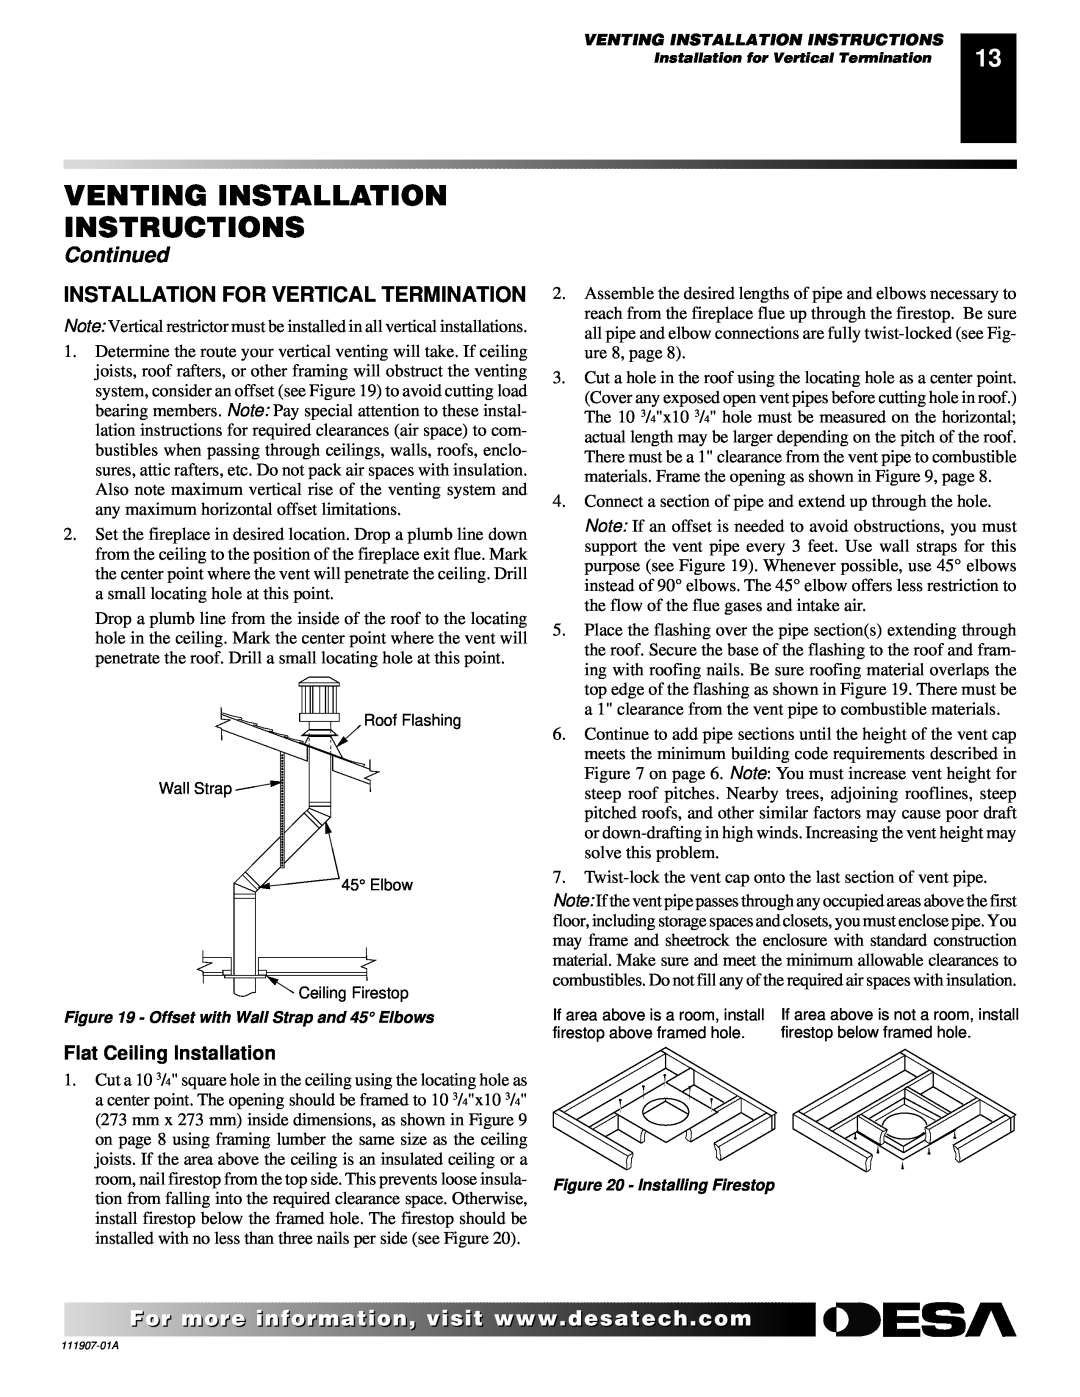 Desa (V)V42EPA(1) Installation For Vertical Termination, Flat Ceiling Installation, Venting Installation Instructions 